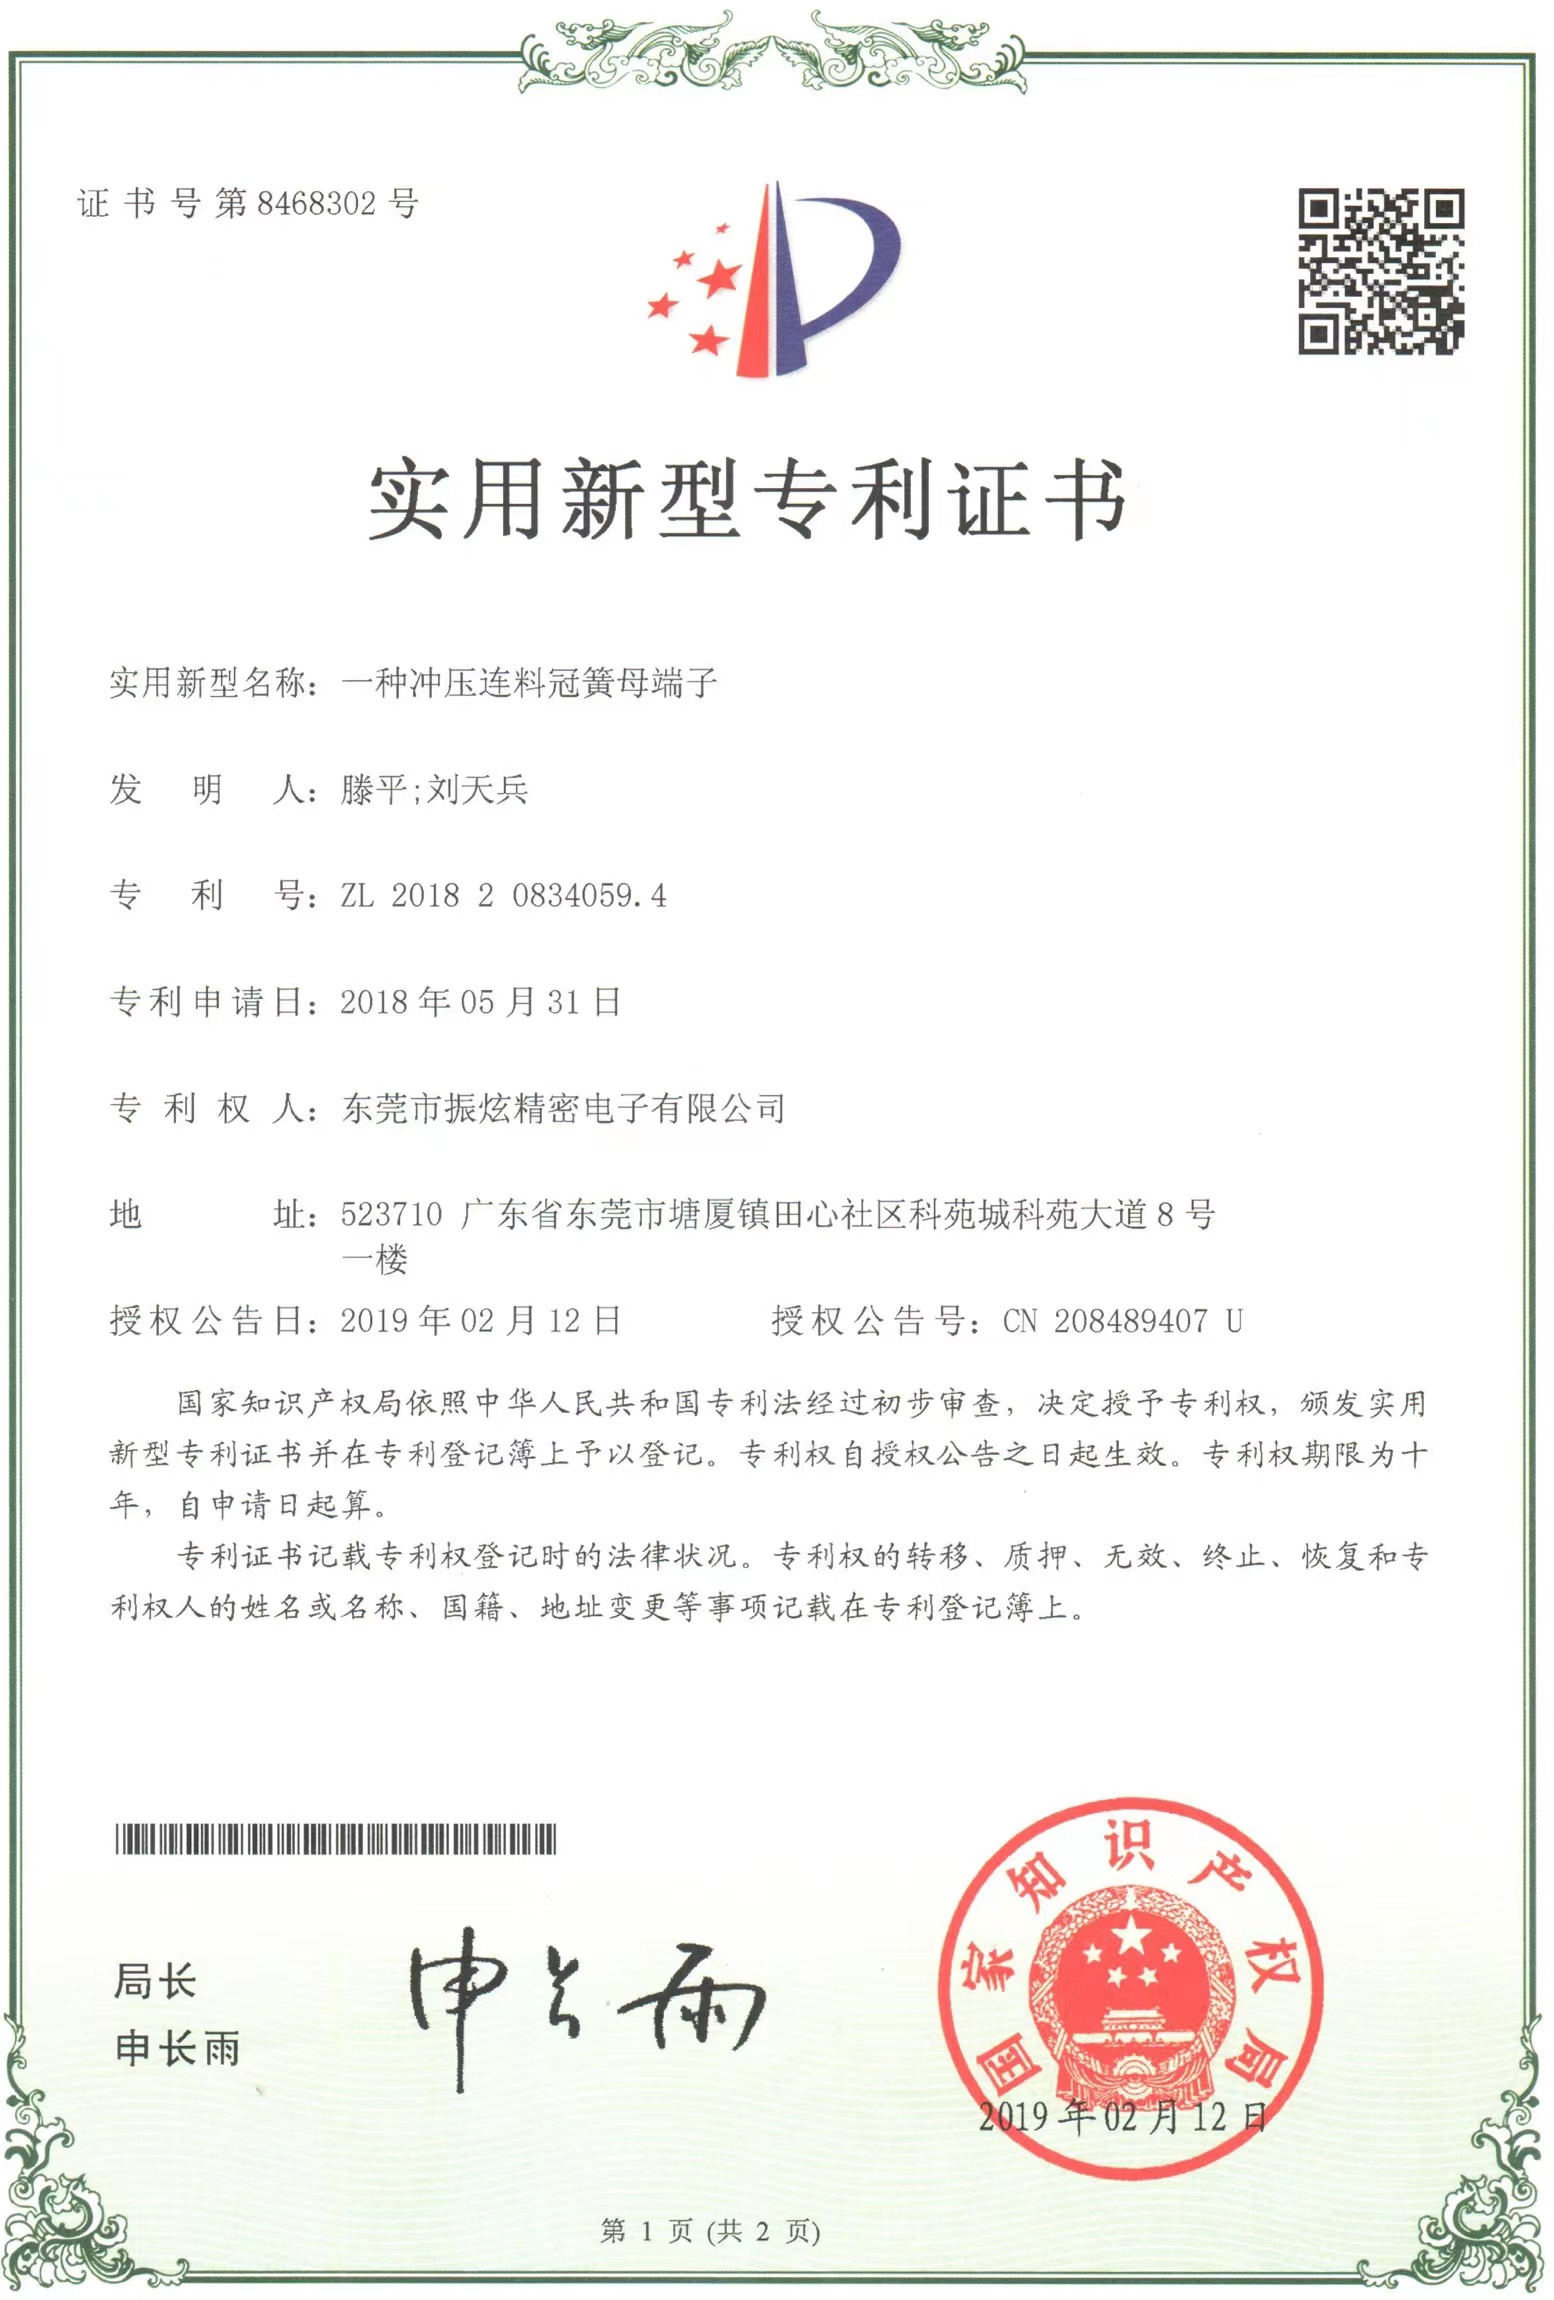 Practical Design Certificate